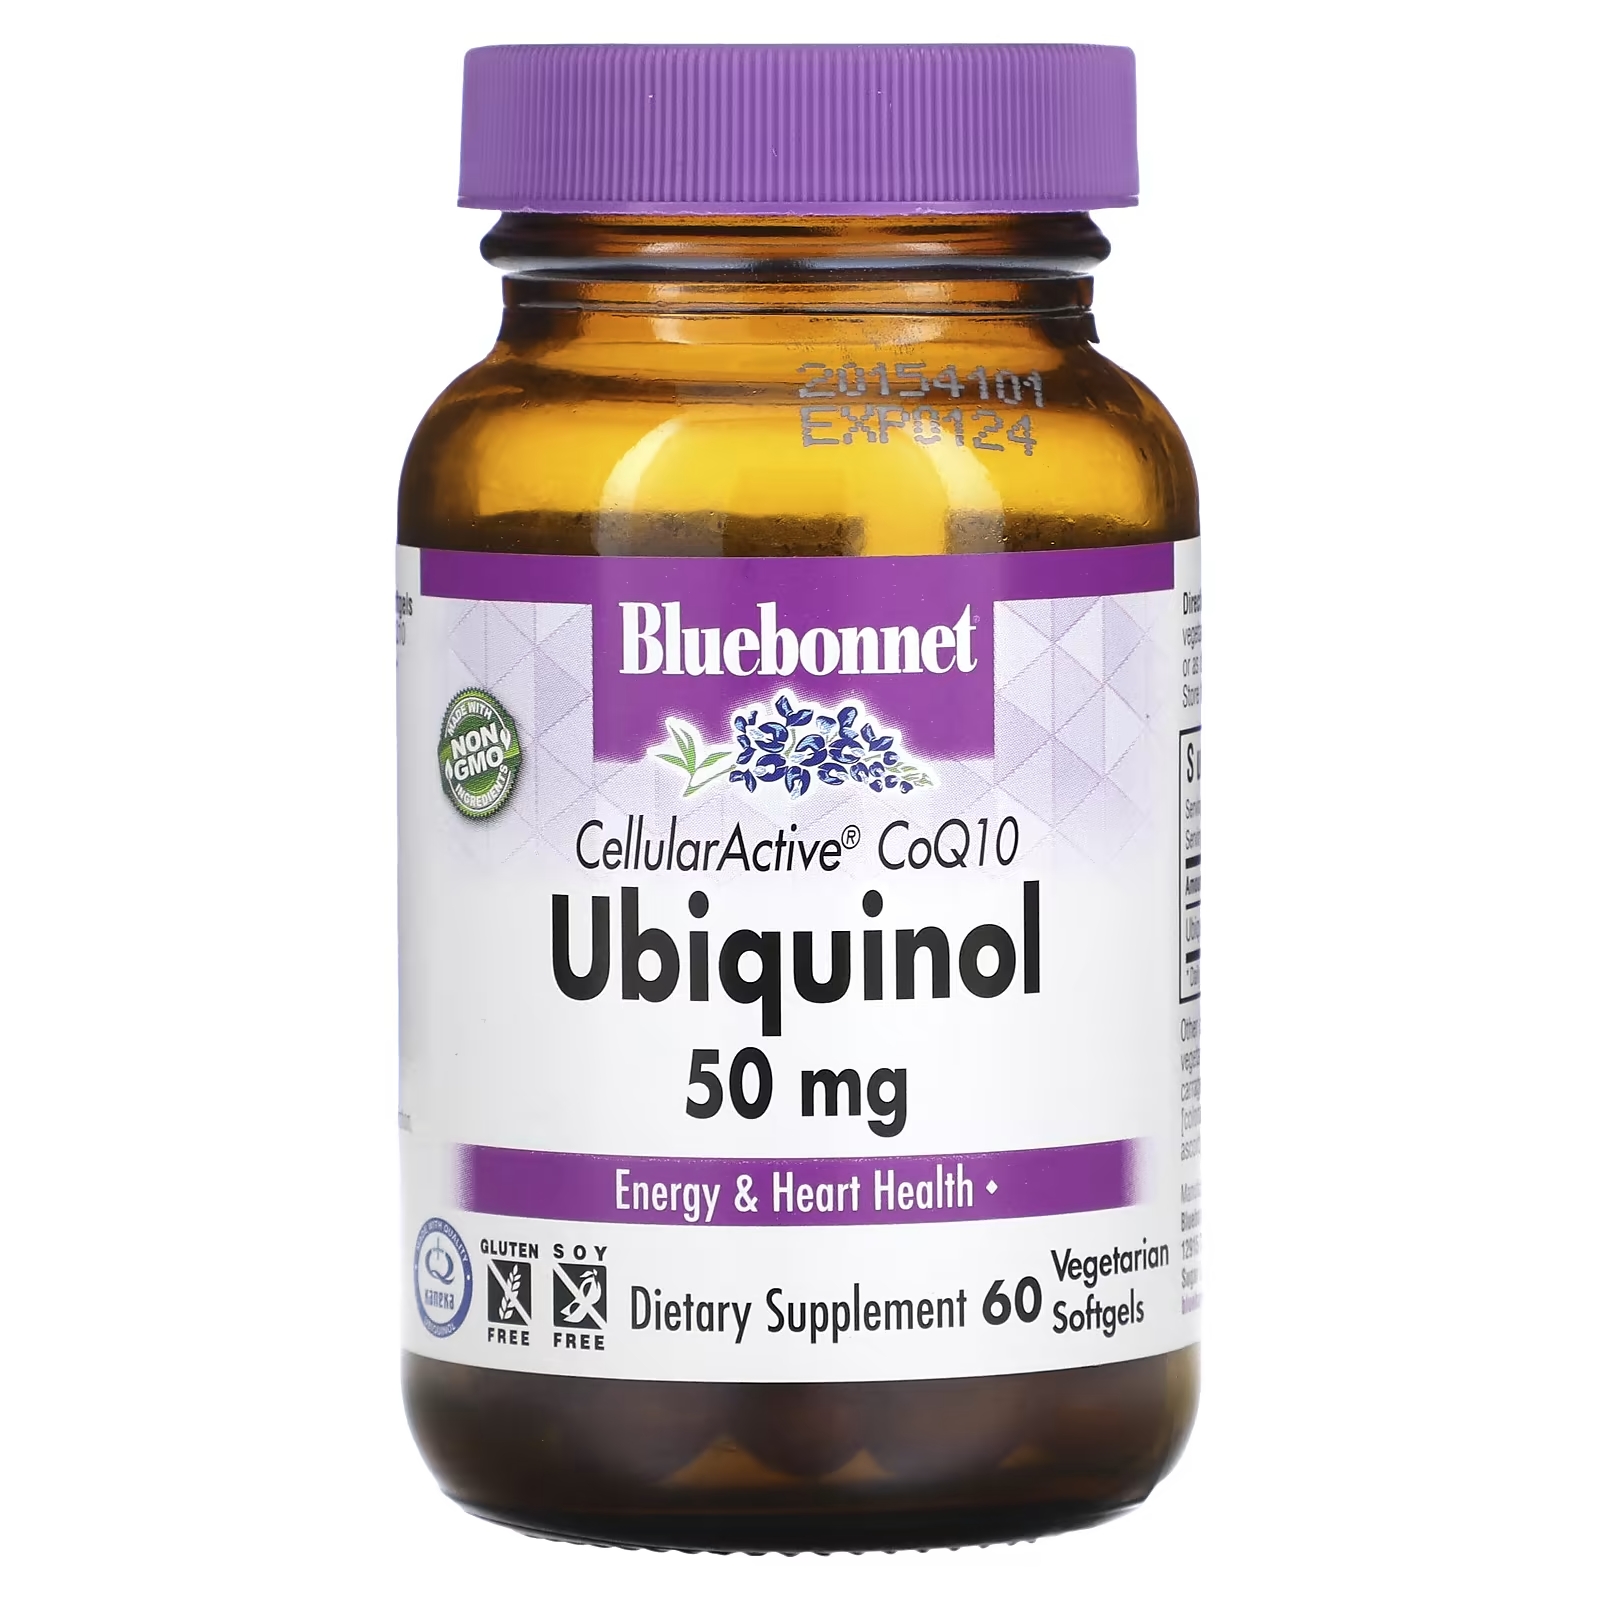 Bluebonnet Nutrition Ubiquinol Cellular Active CoQ10 50 мг, 60 растительных капсул убихинол cellullaractive coq10 200 мг 60 капсул bluebonnet nutrition